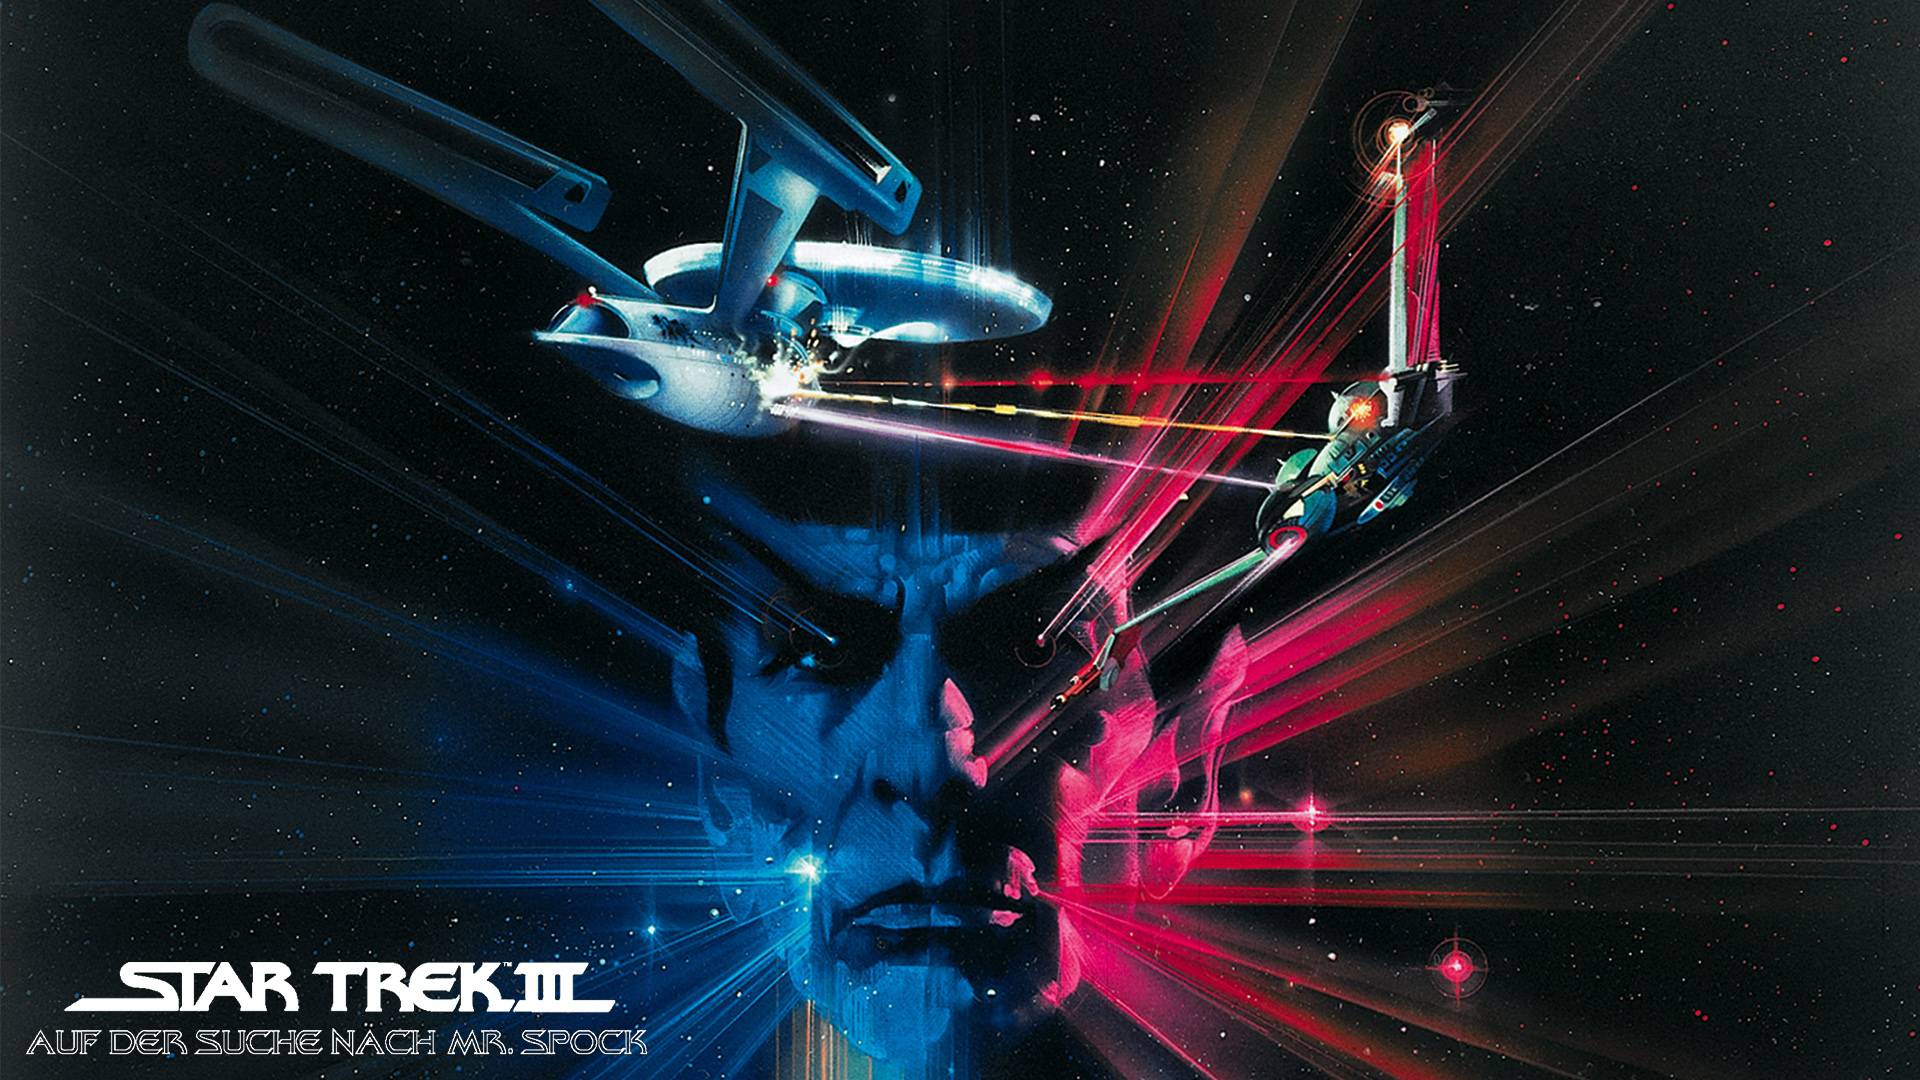 Star Trek Iii - Star Trek The Search For Spock Poster , HD Wallpaper & Backgrounds